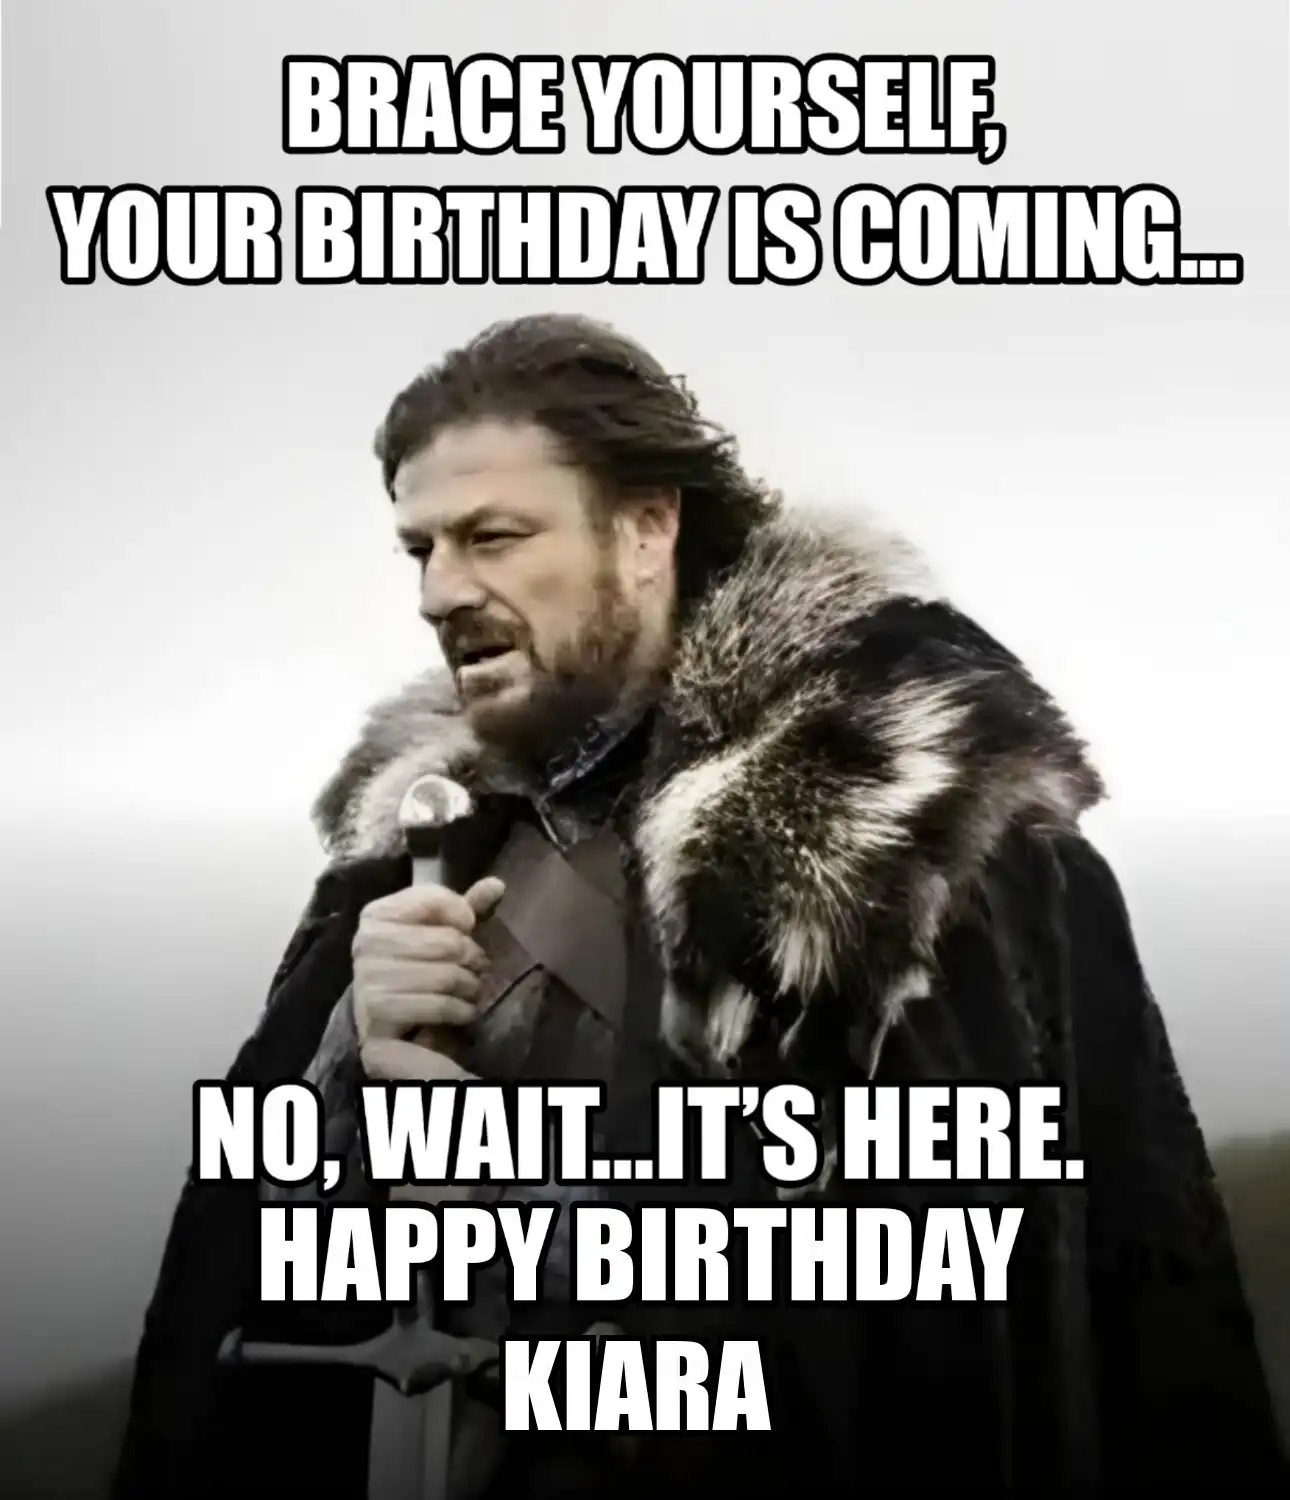 Happy Birthday Kiara Brace Yourself Your Birthday Is Coming Meme